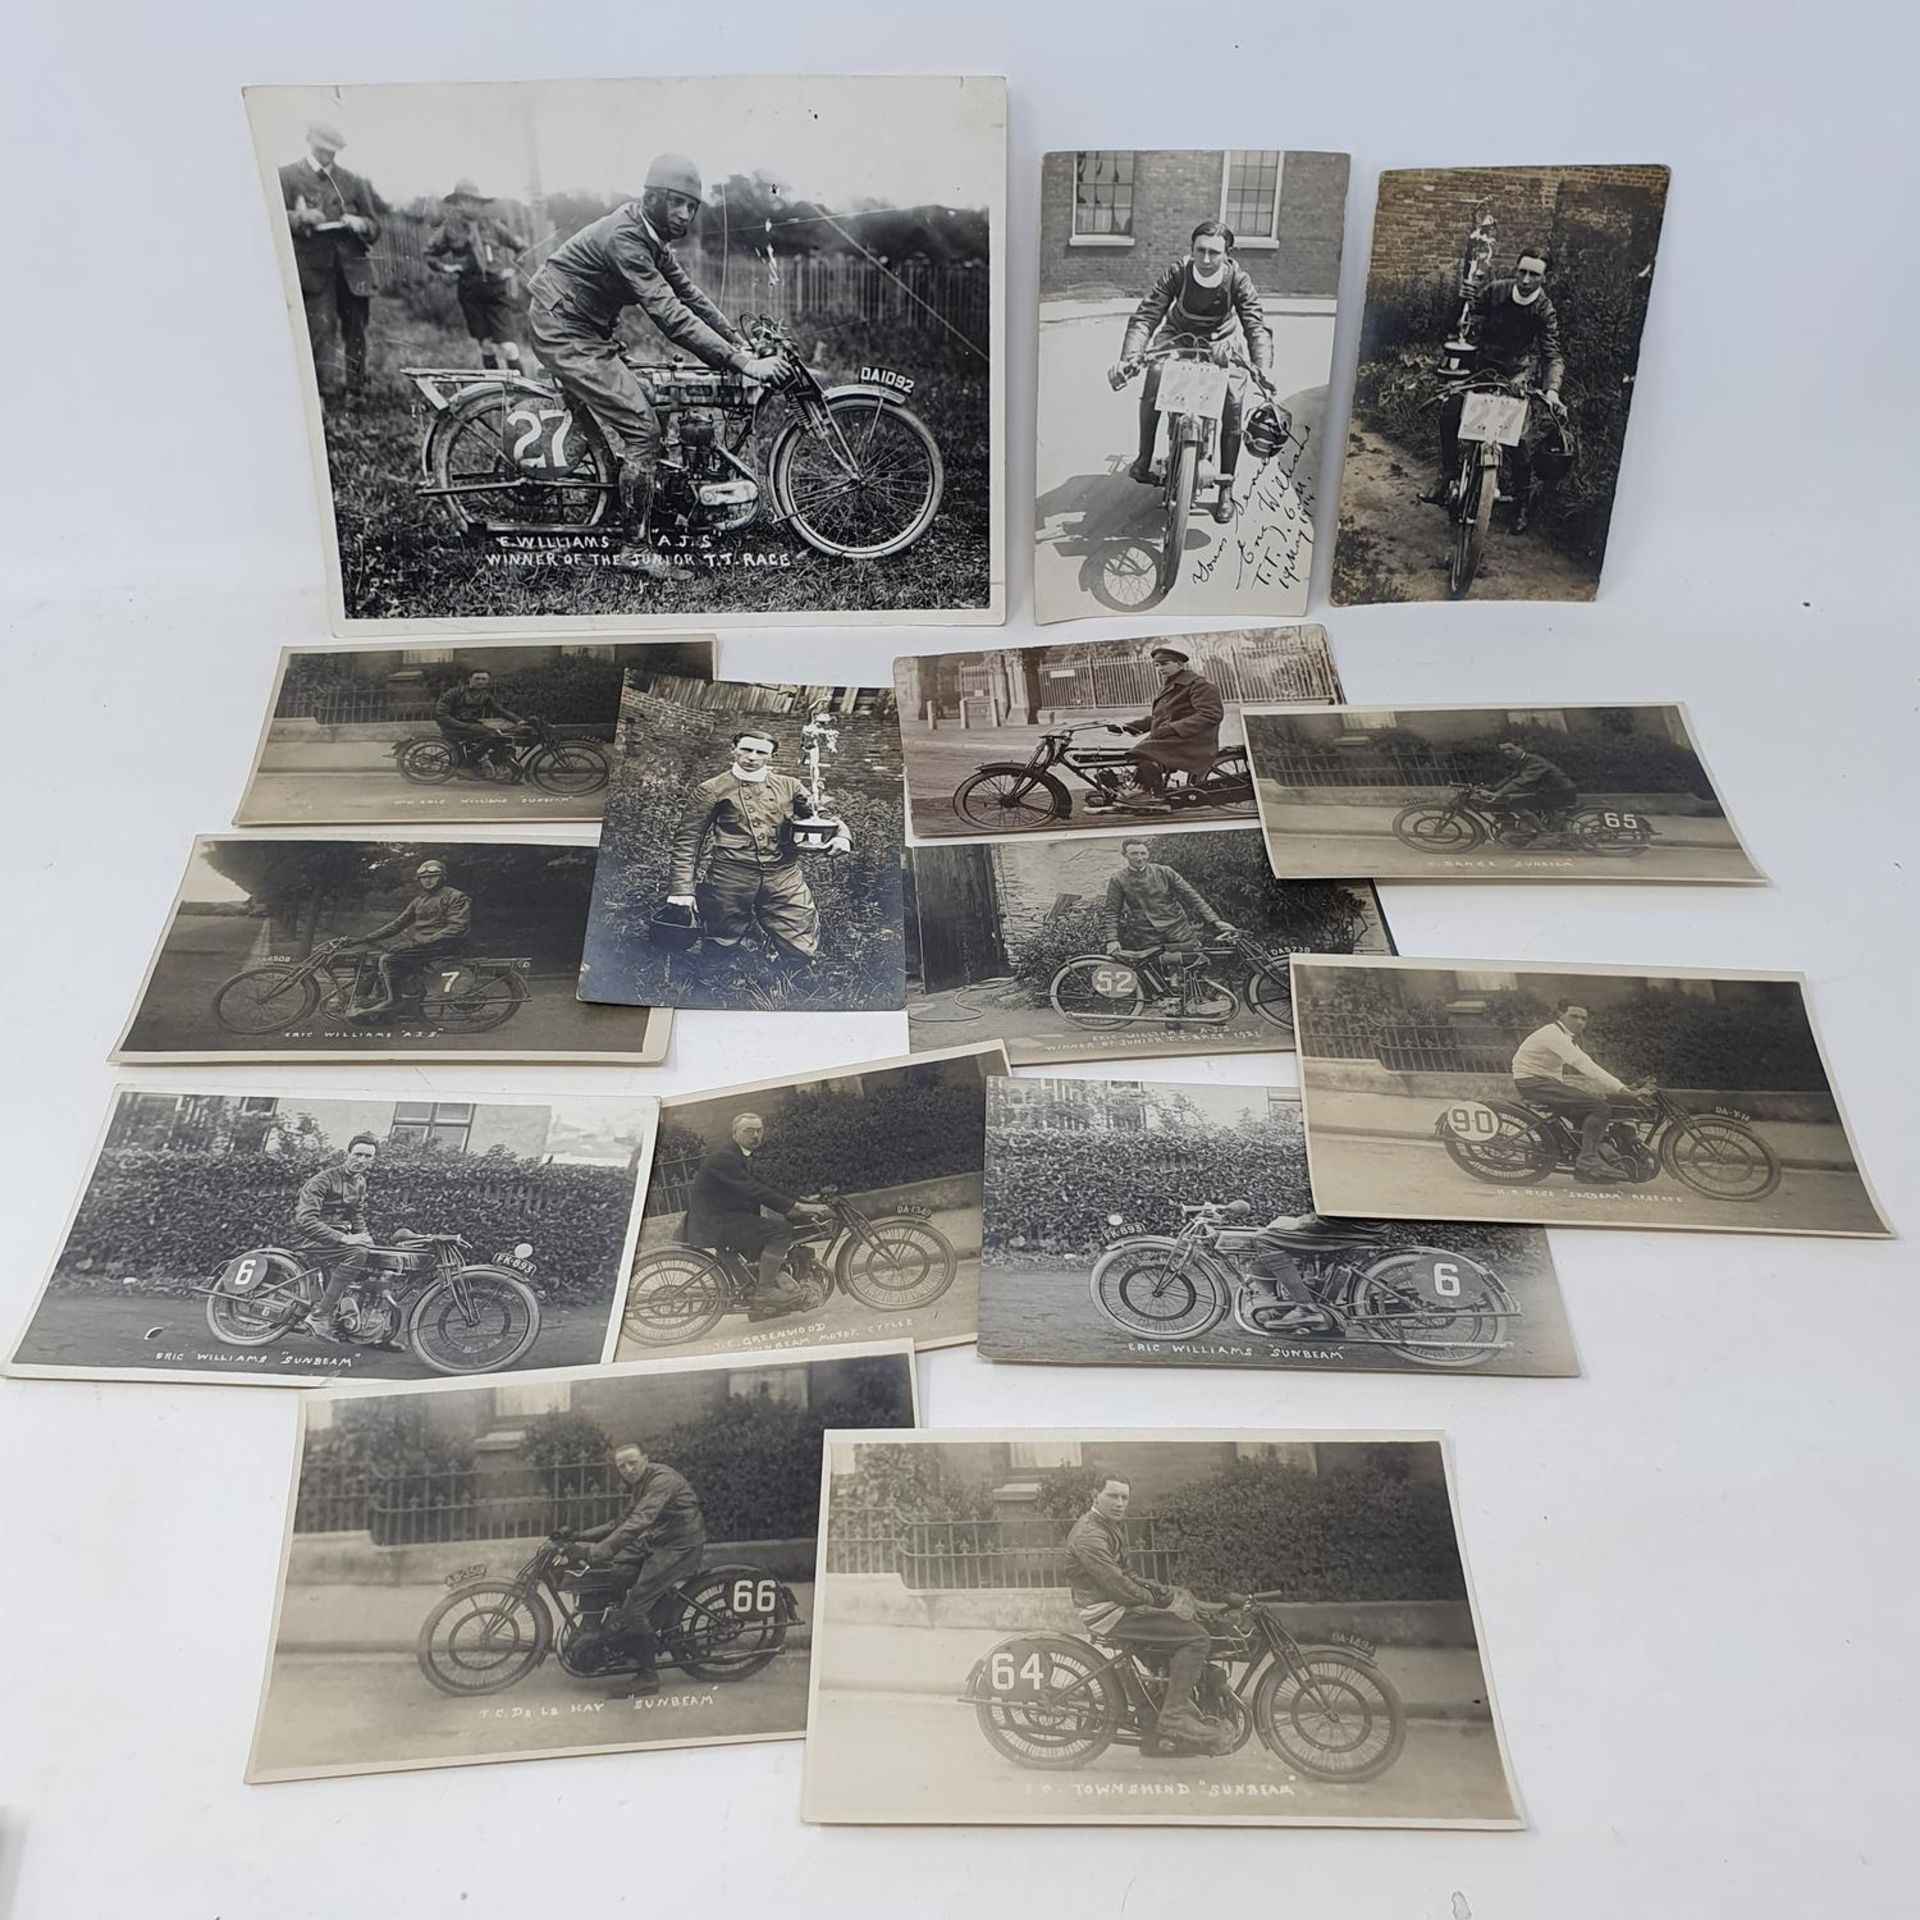 A monochrome photograph, E Williams AJS Winner of the Junior TT Race, 16 x 21 cm, a photographic